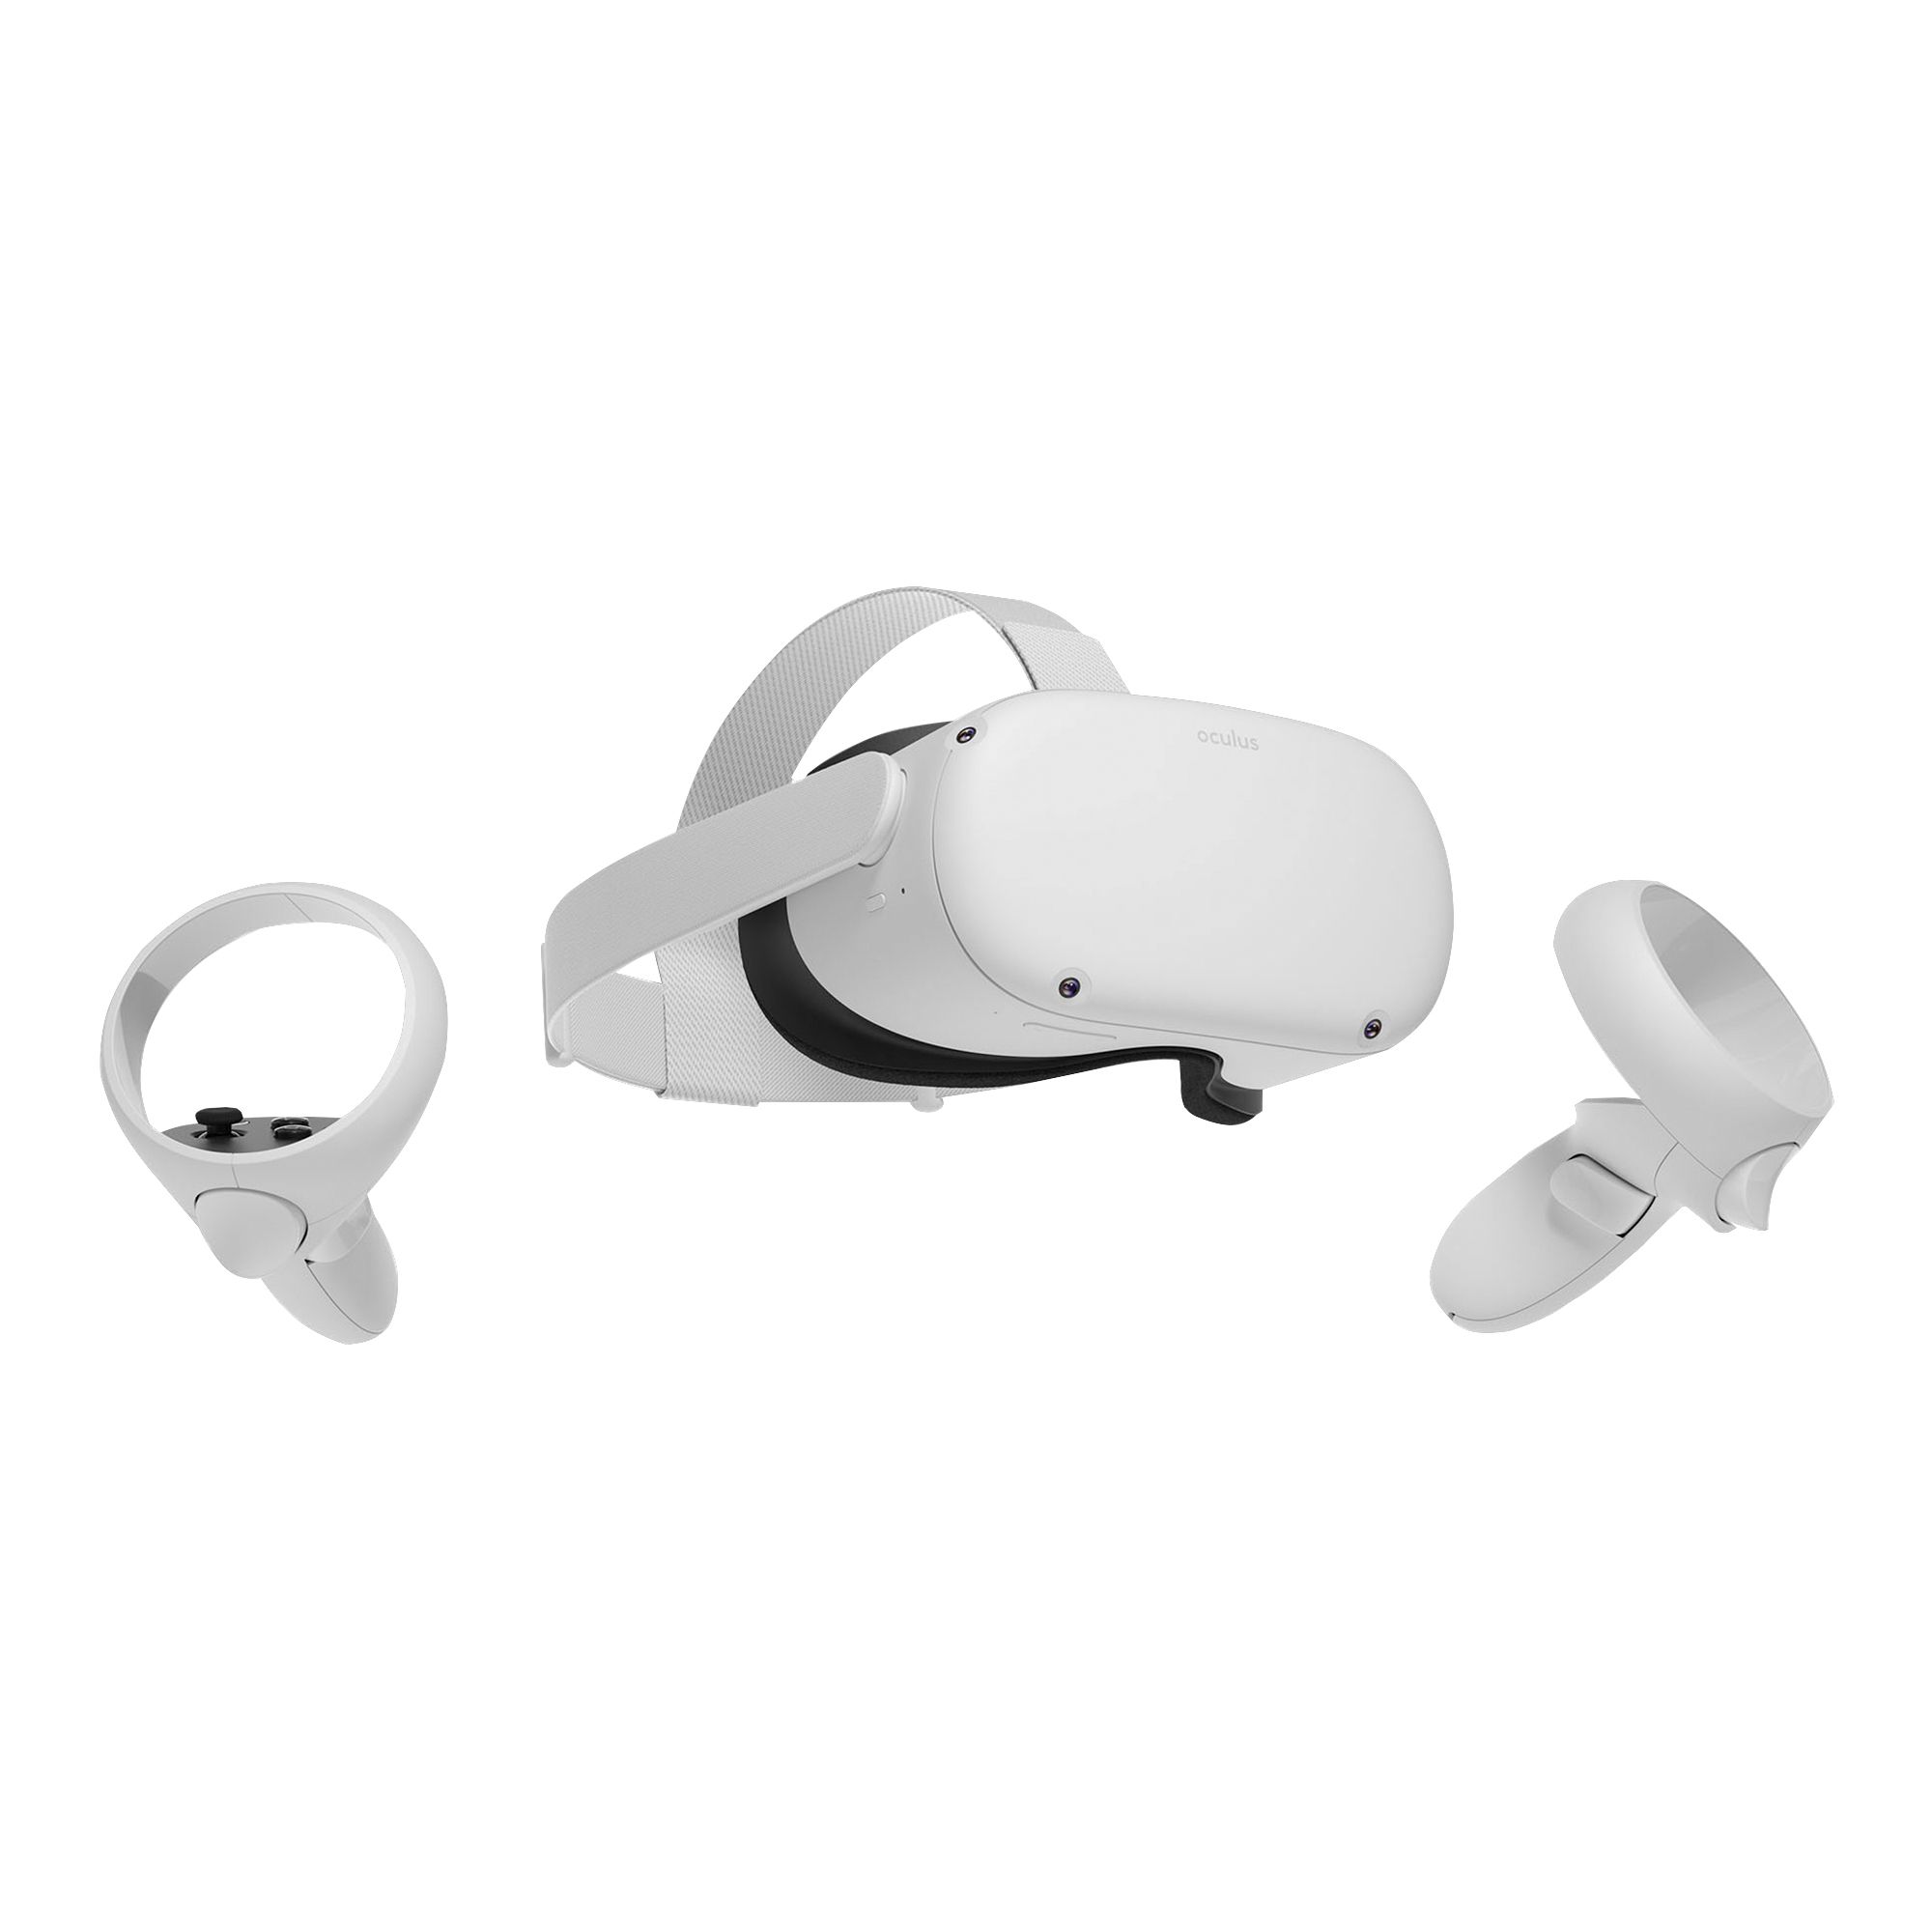 Meta (Oculus) Quest 2 128GB VR Headset (US Plug)